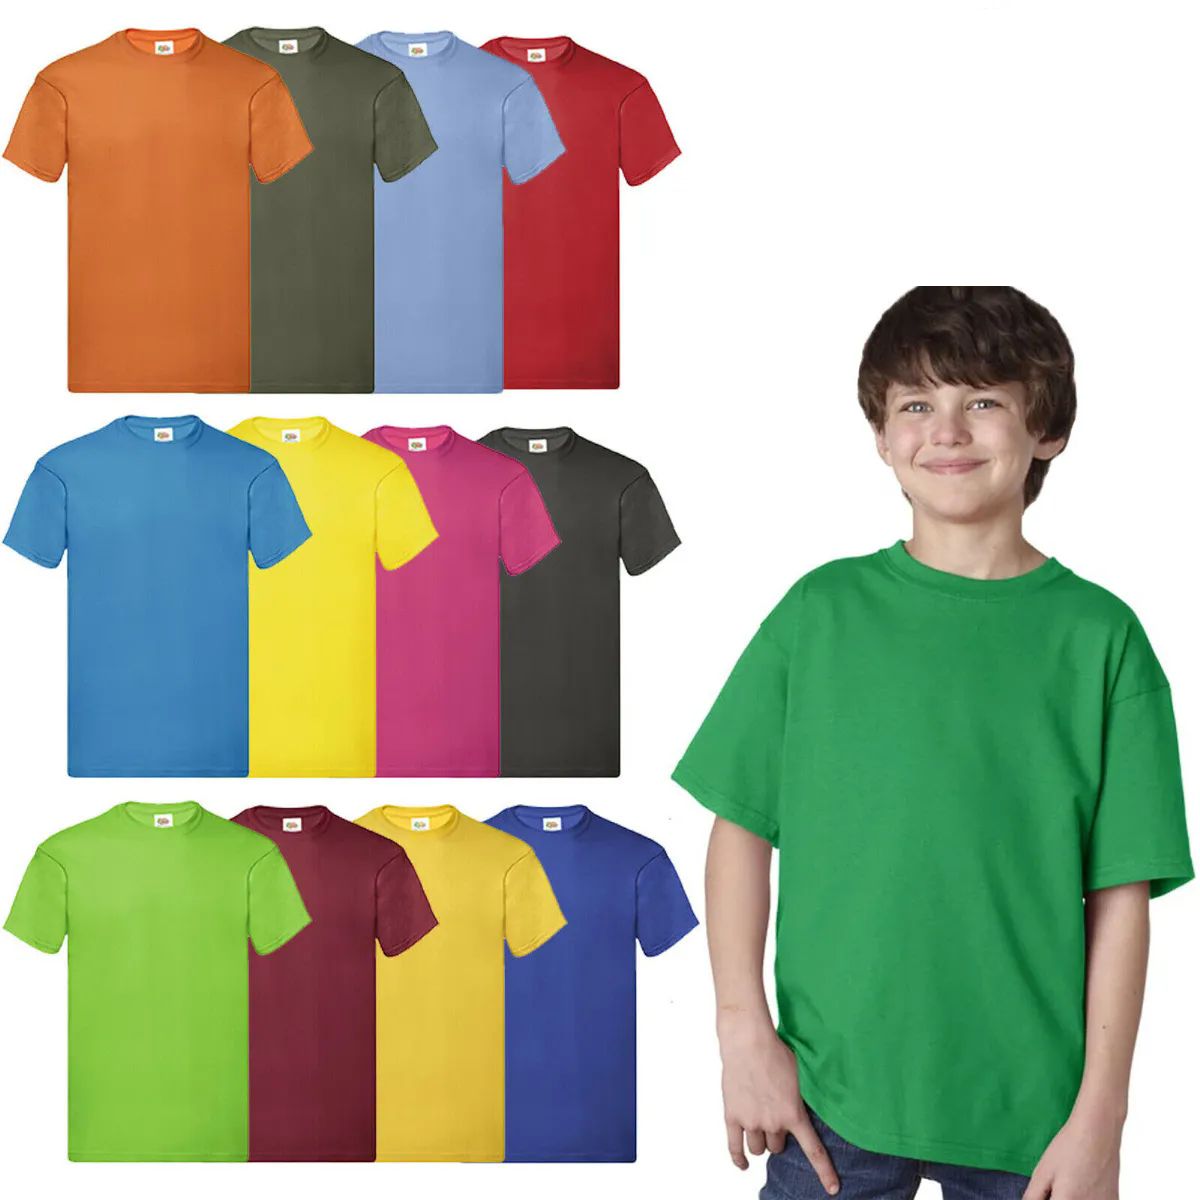 144 Wholesale Billion Hats Kids Youth Cotton Assorted Colors T Shirts Size M